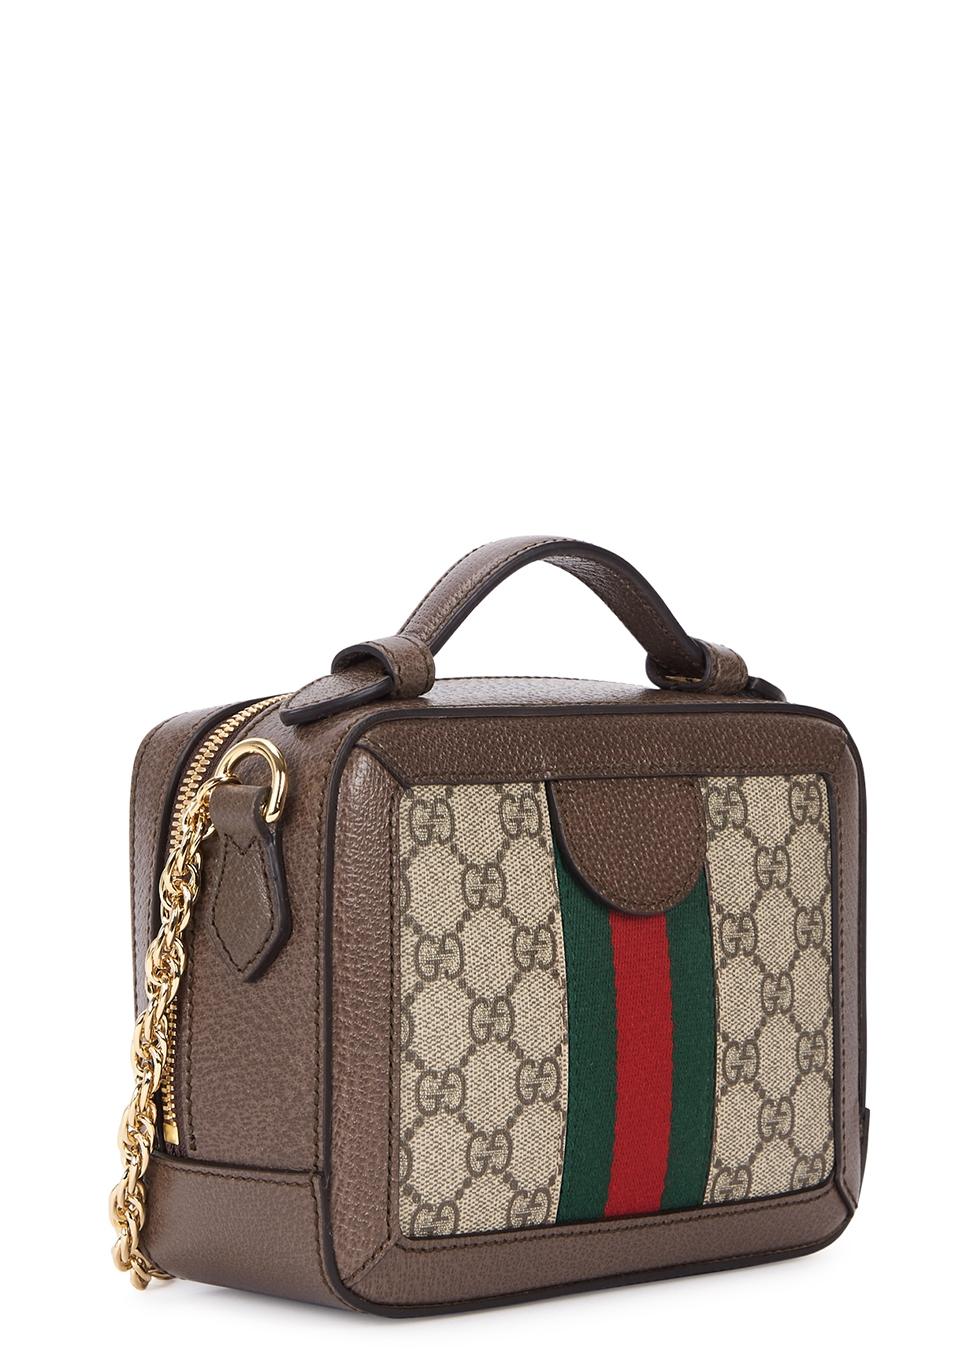 Gucci Ophidia GG Mini Monogrammed Cross-body Bag in Beige (Brown) - Lyst